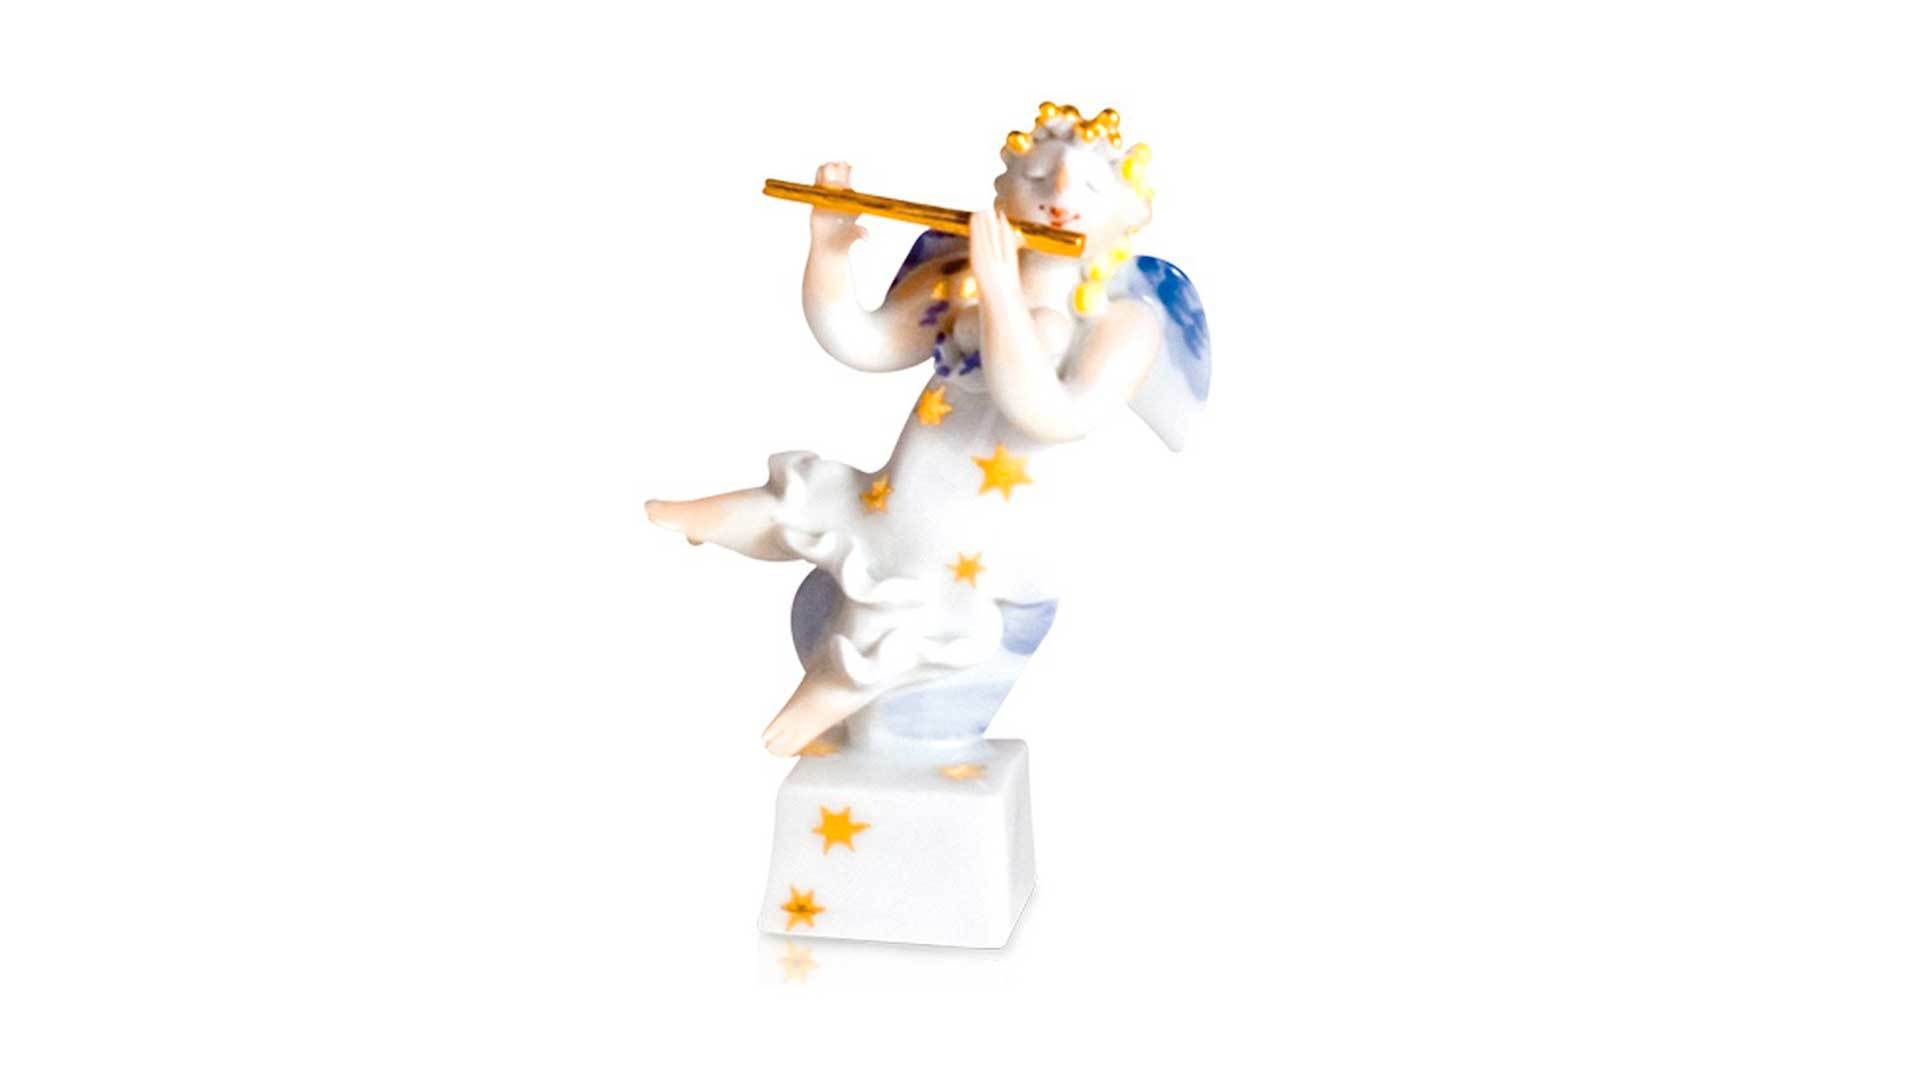 Фигурка Meissen 9 см Ангел с флейтой, ПШтранг АНГЕЛЫ